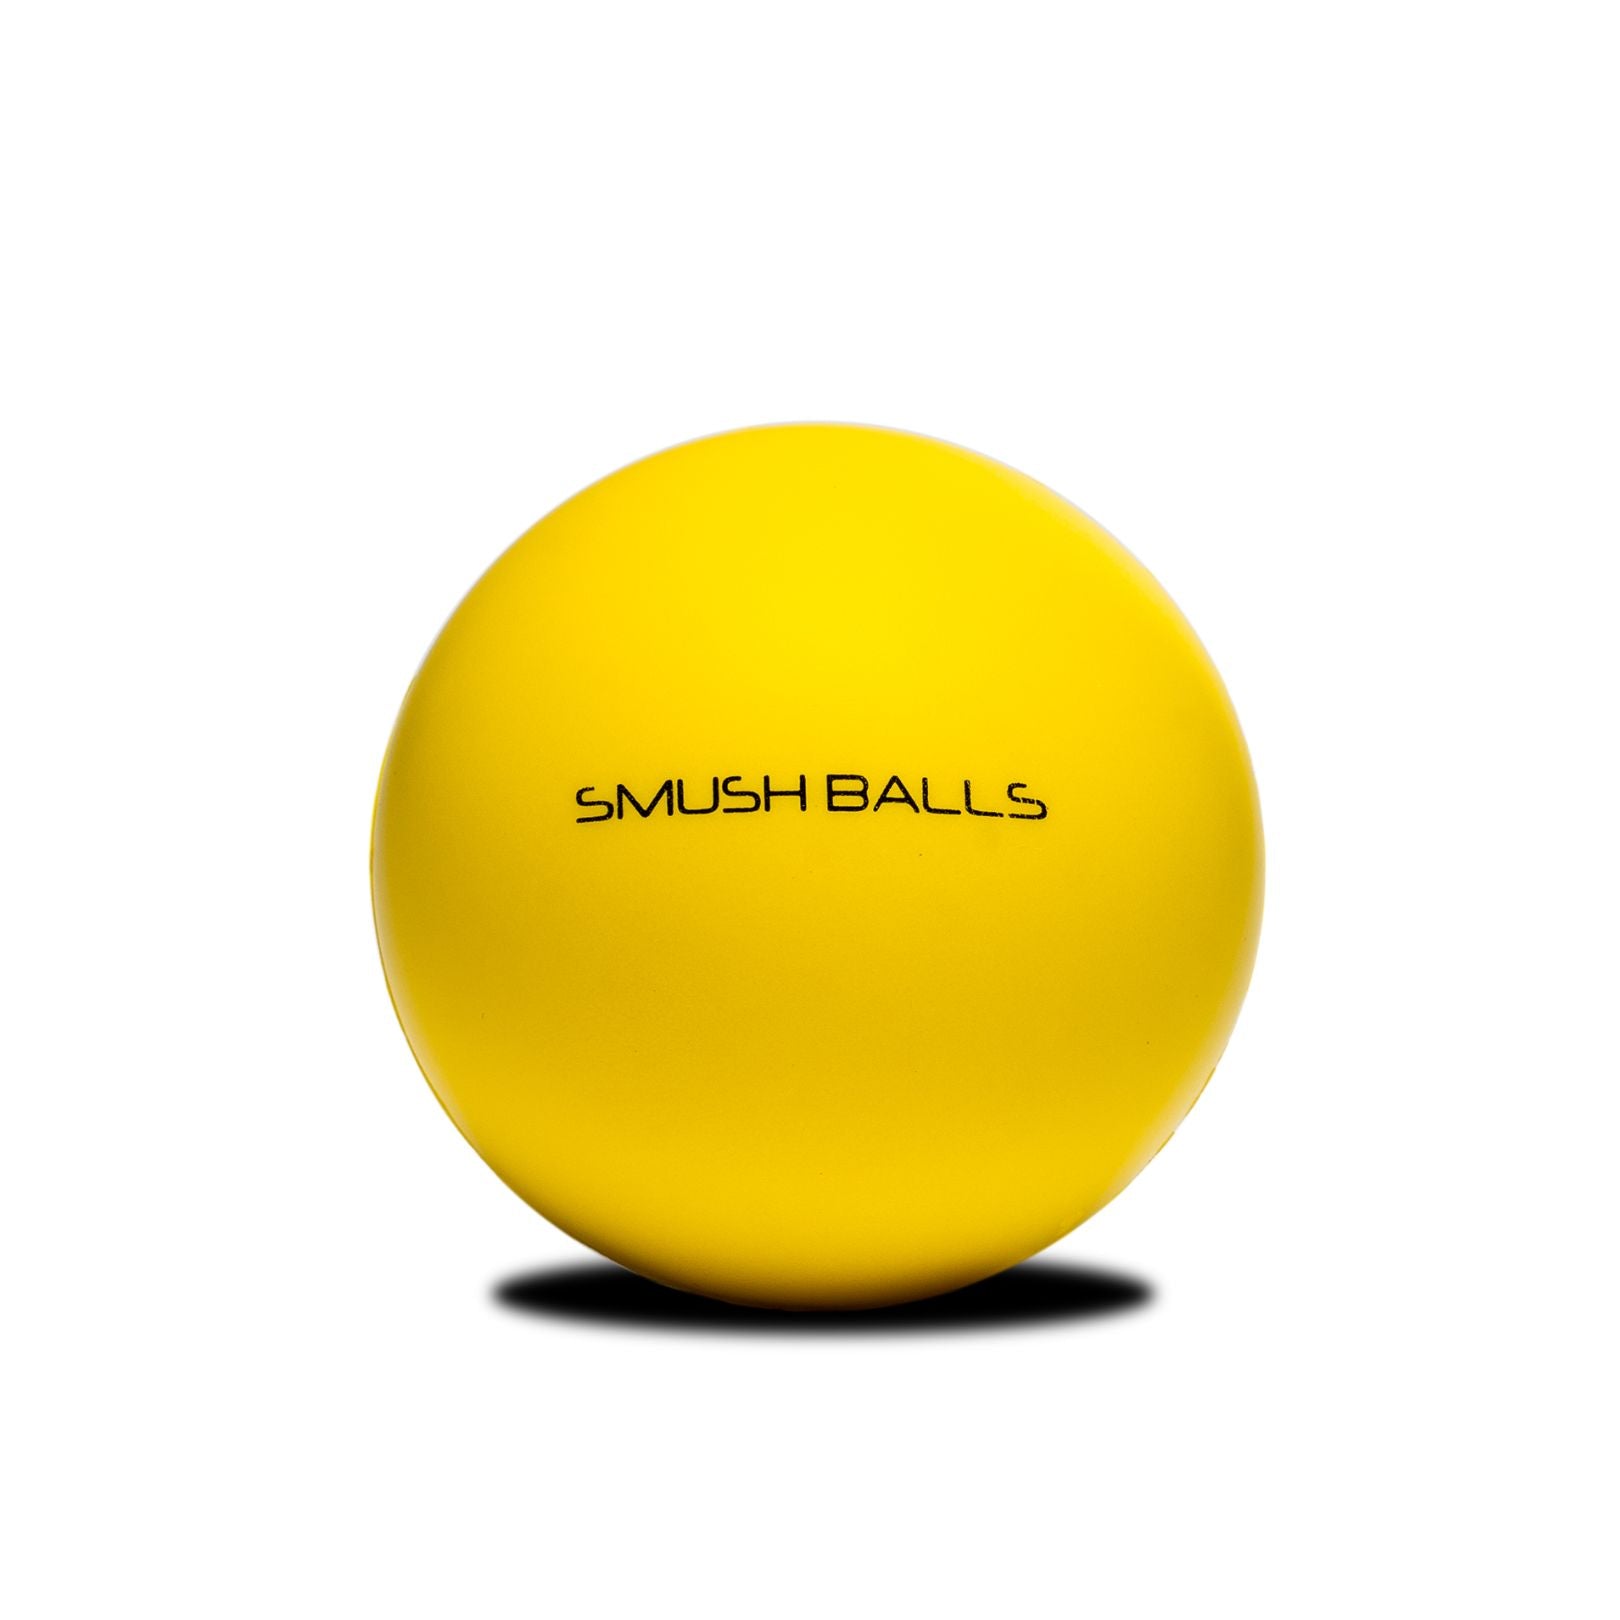 Softball Smushballs